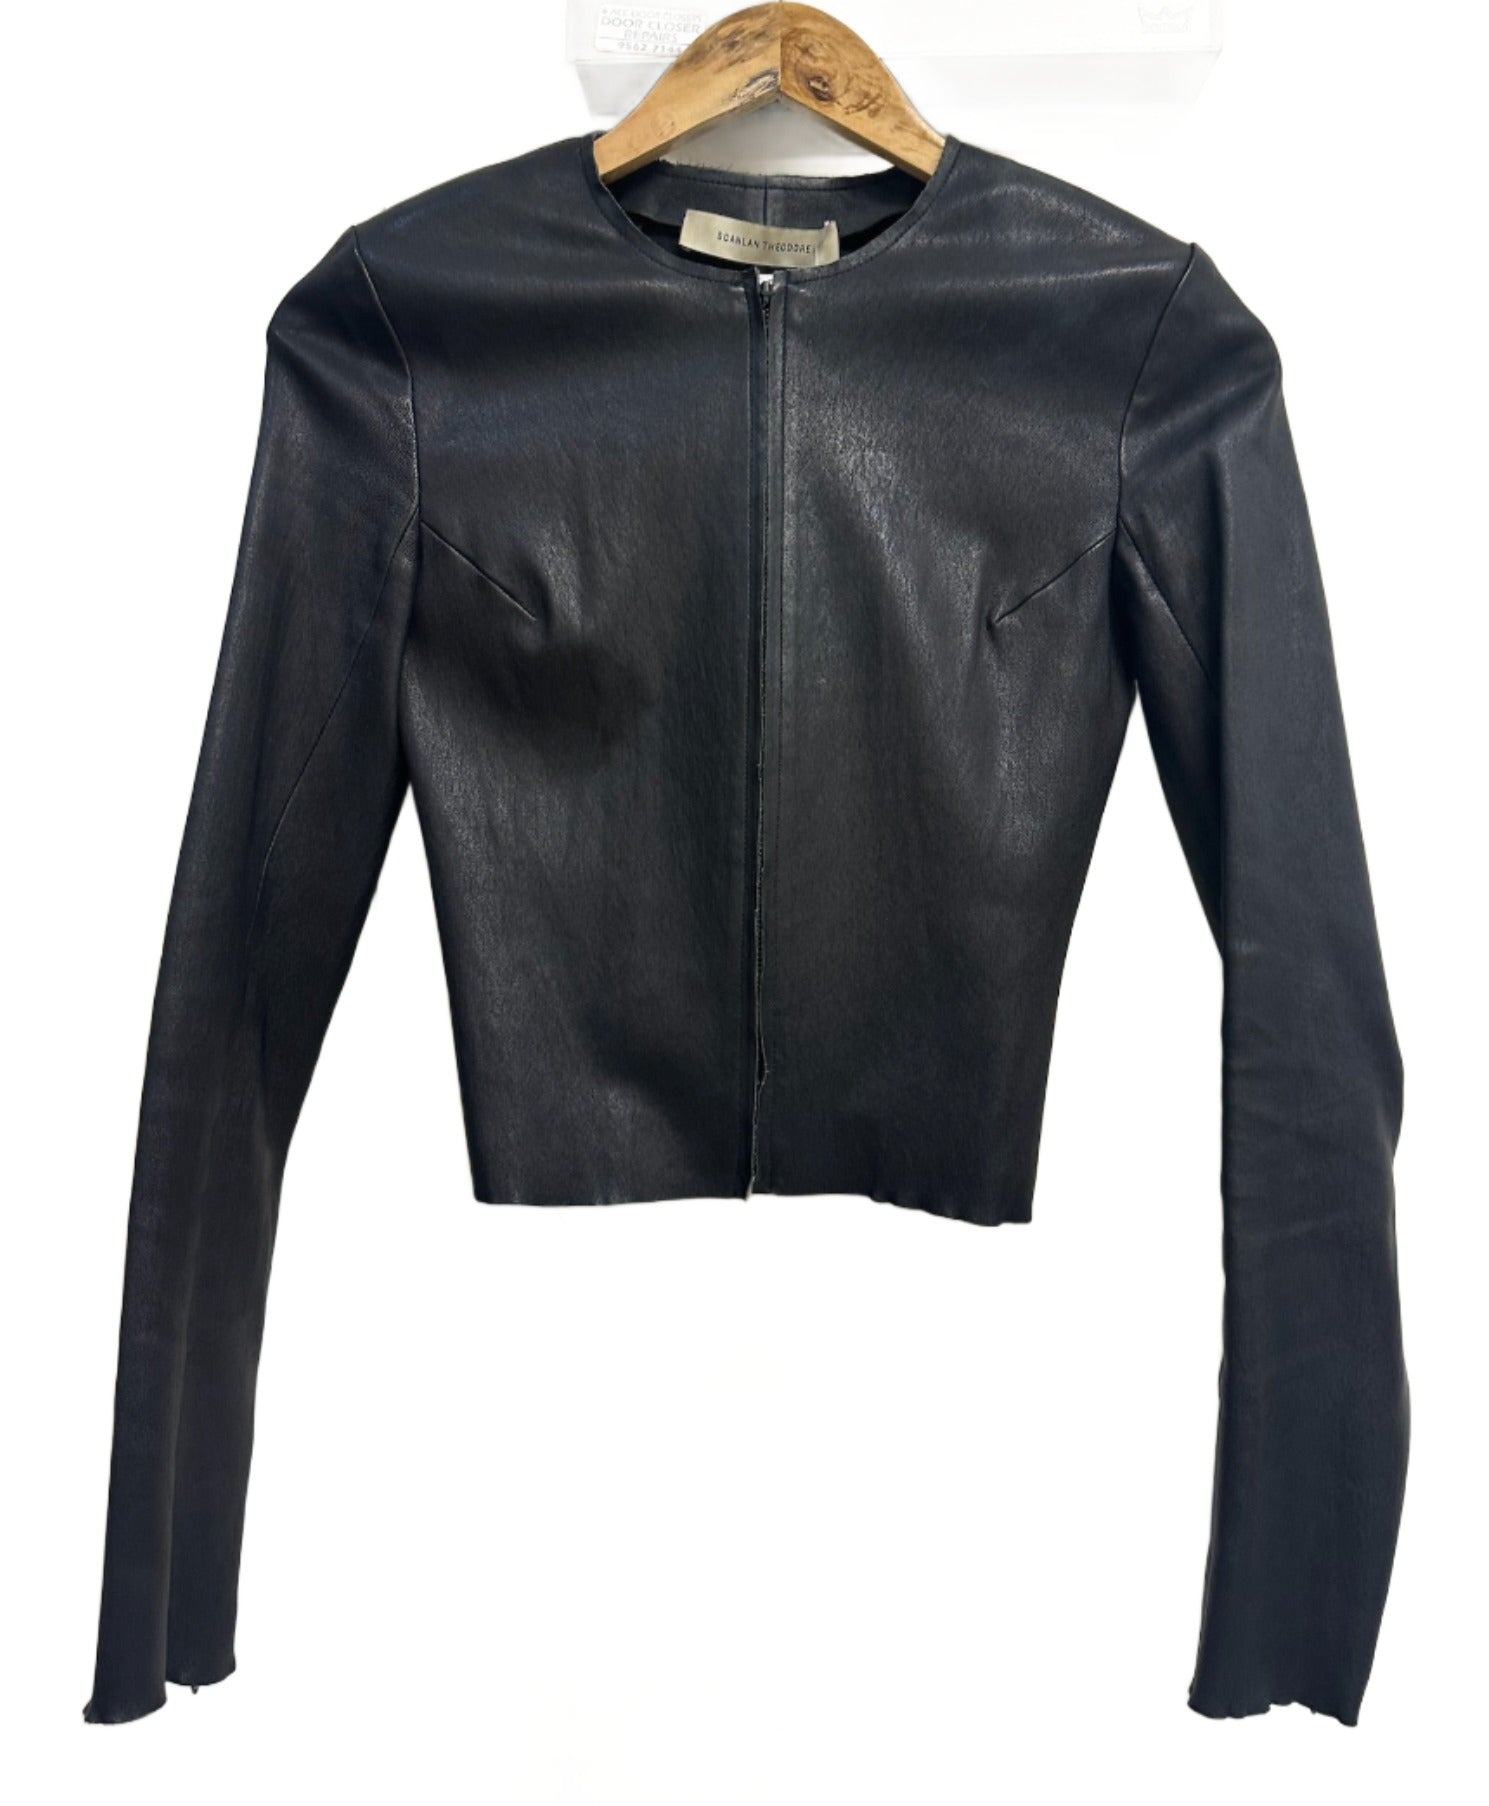 Scanlan Theodore Black Leather Jacket